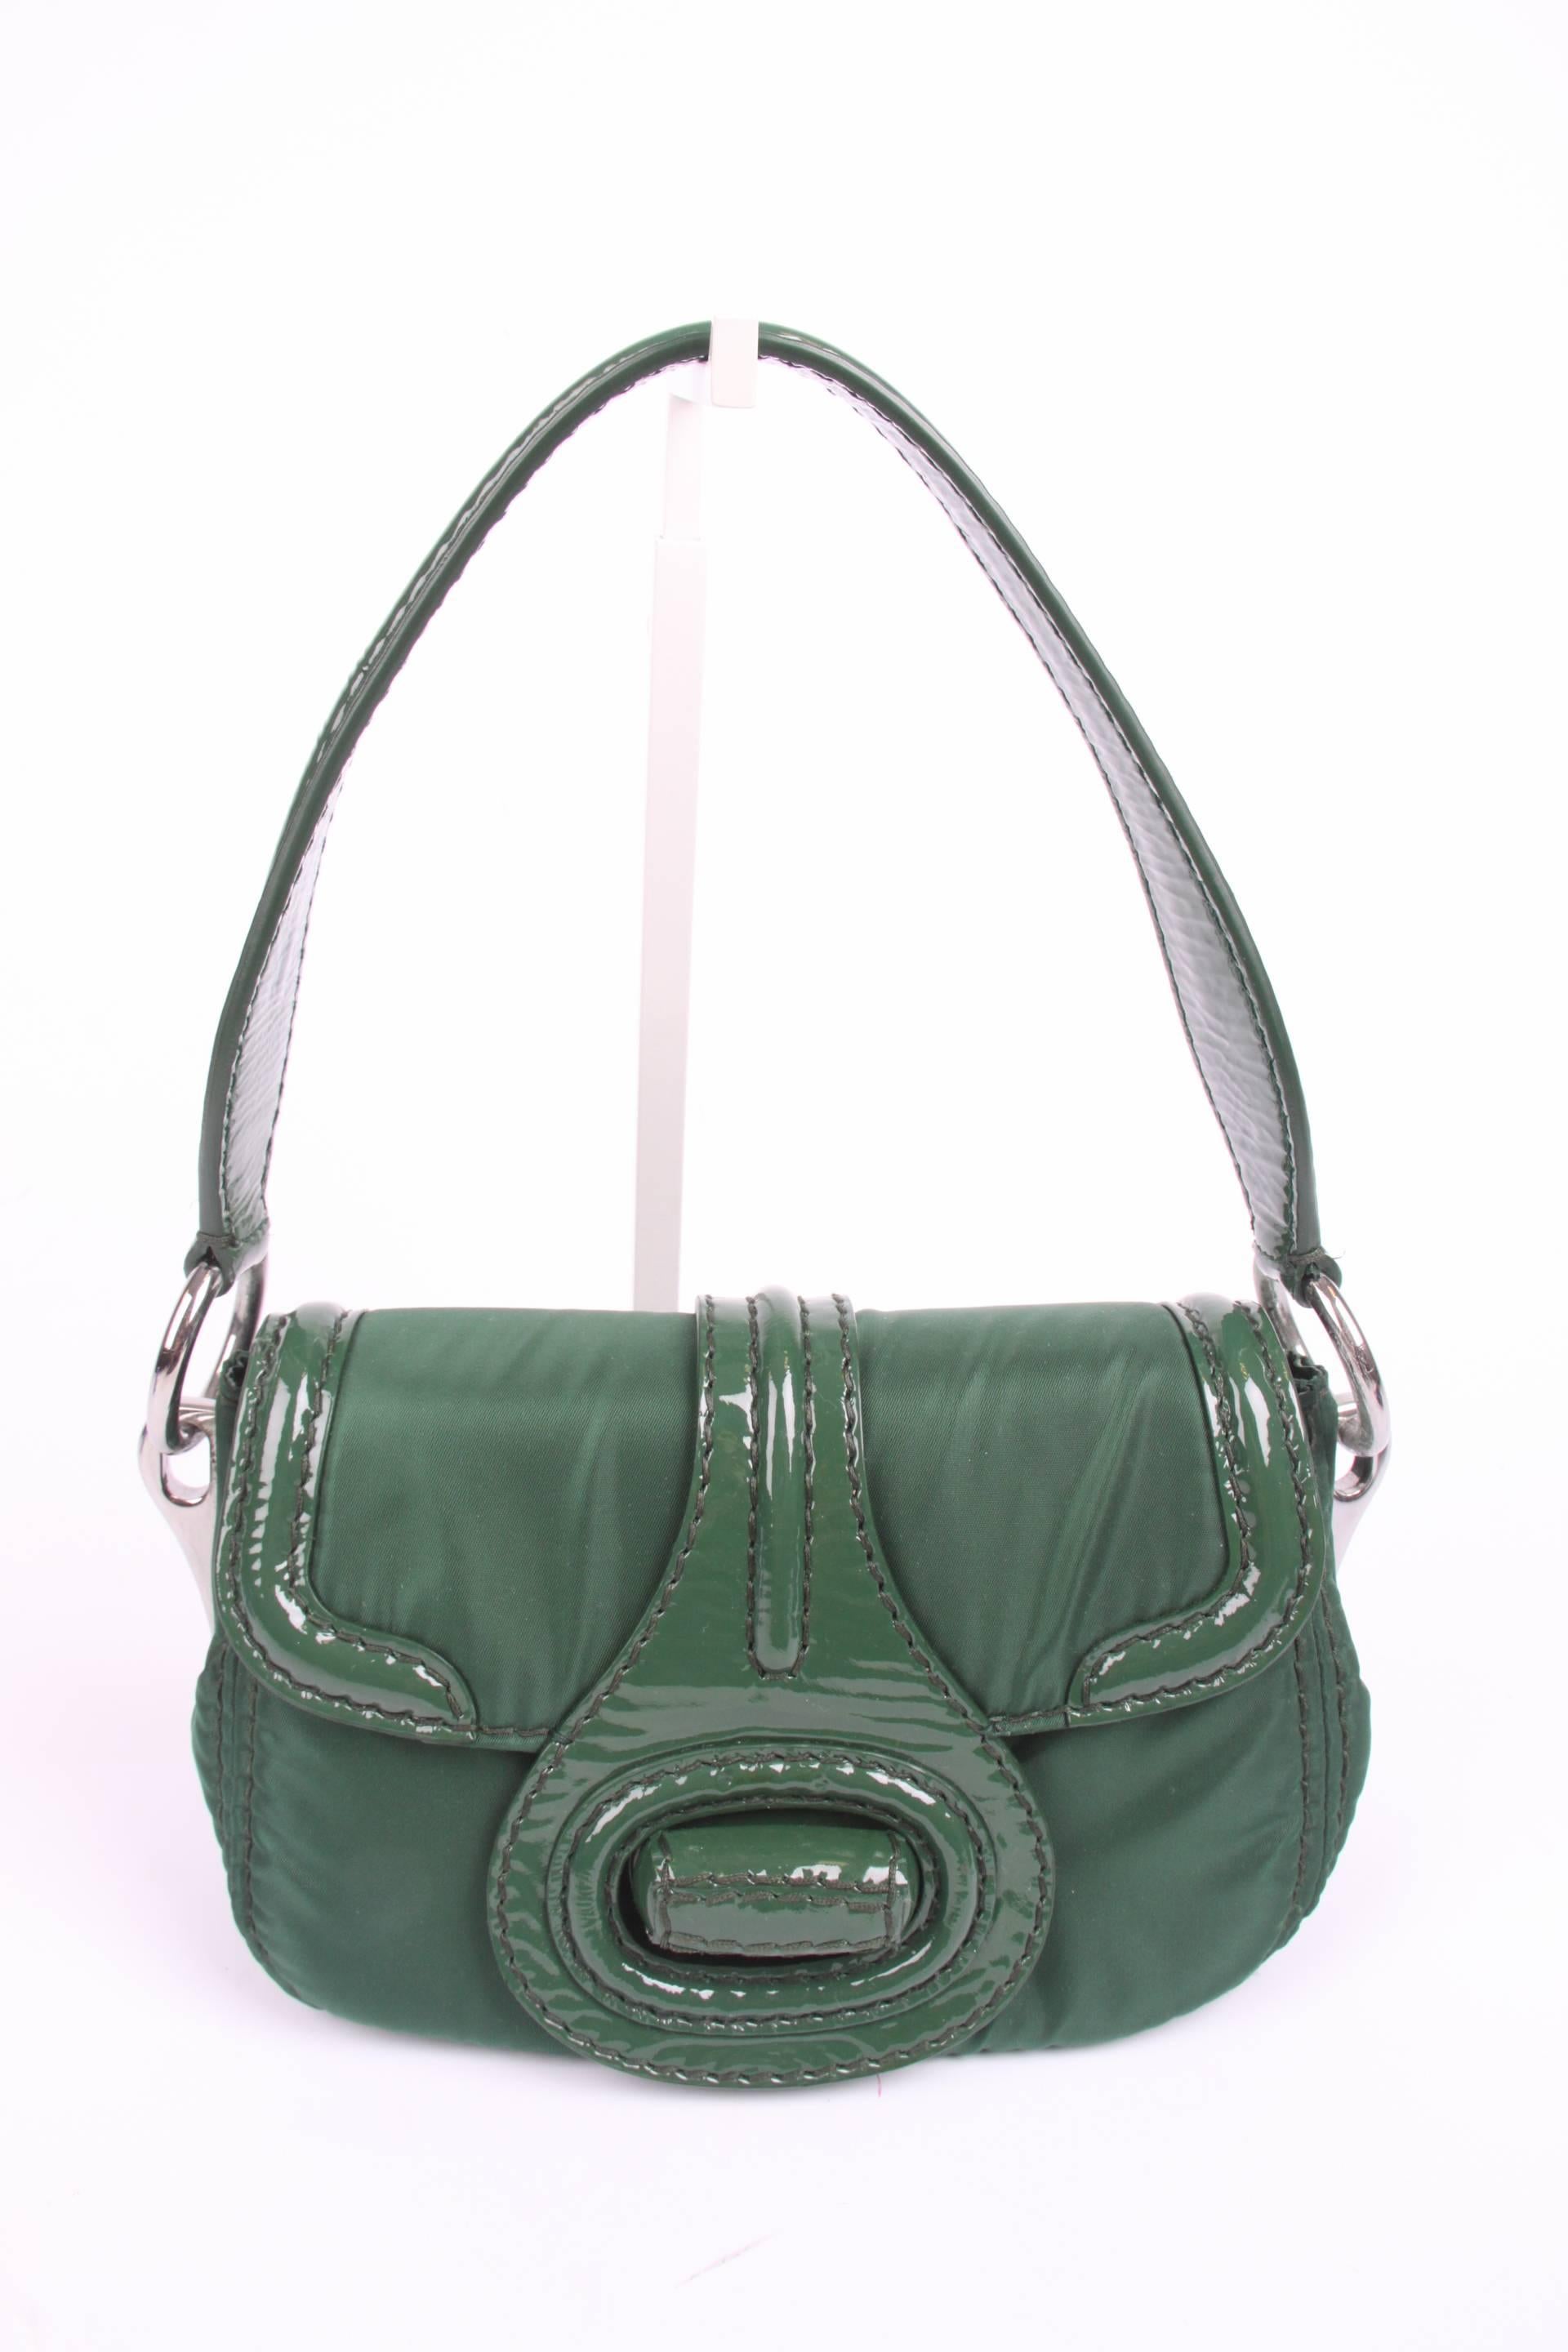 Prada Pattina Sottospalla Handbag - green  For Sale 1